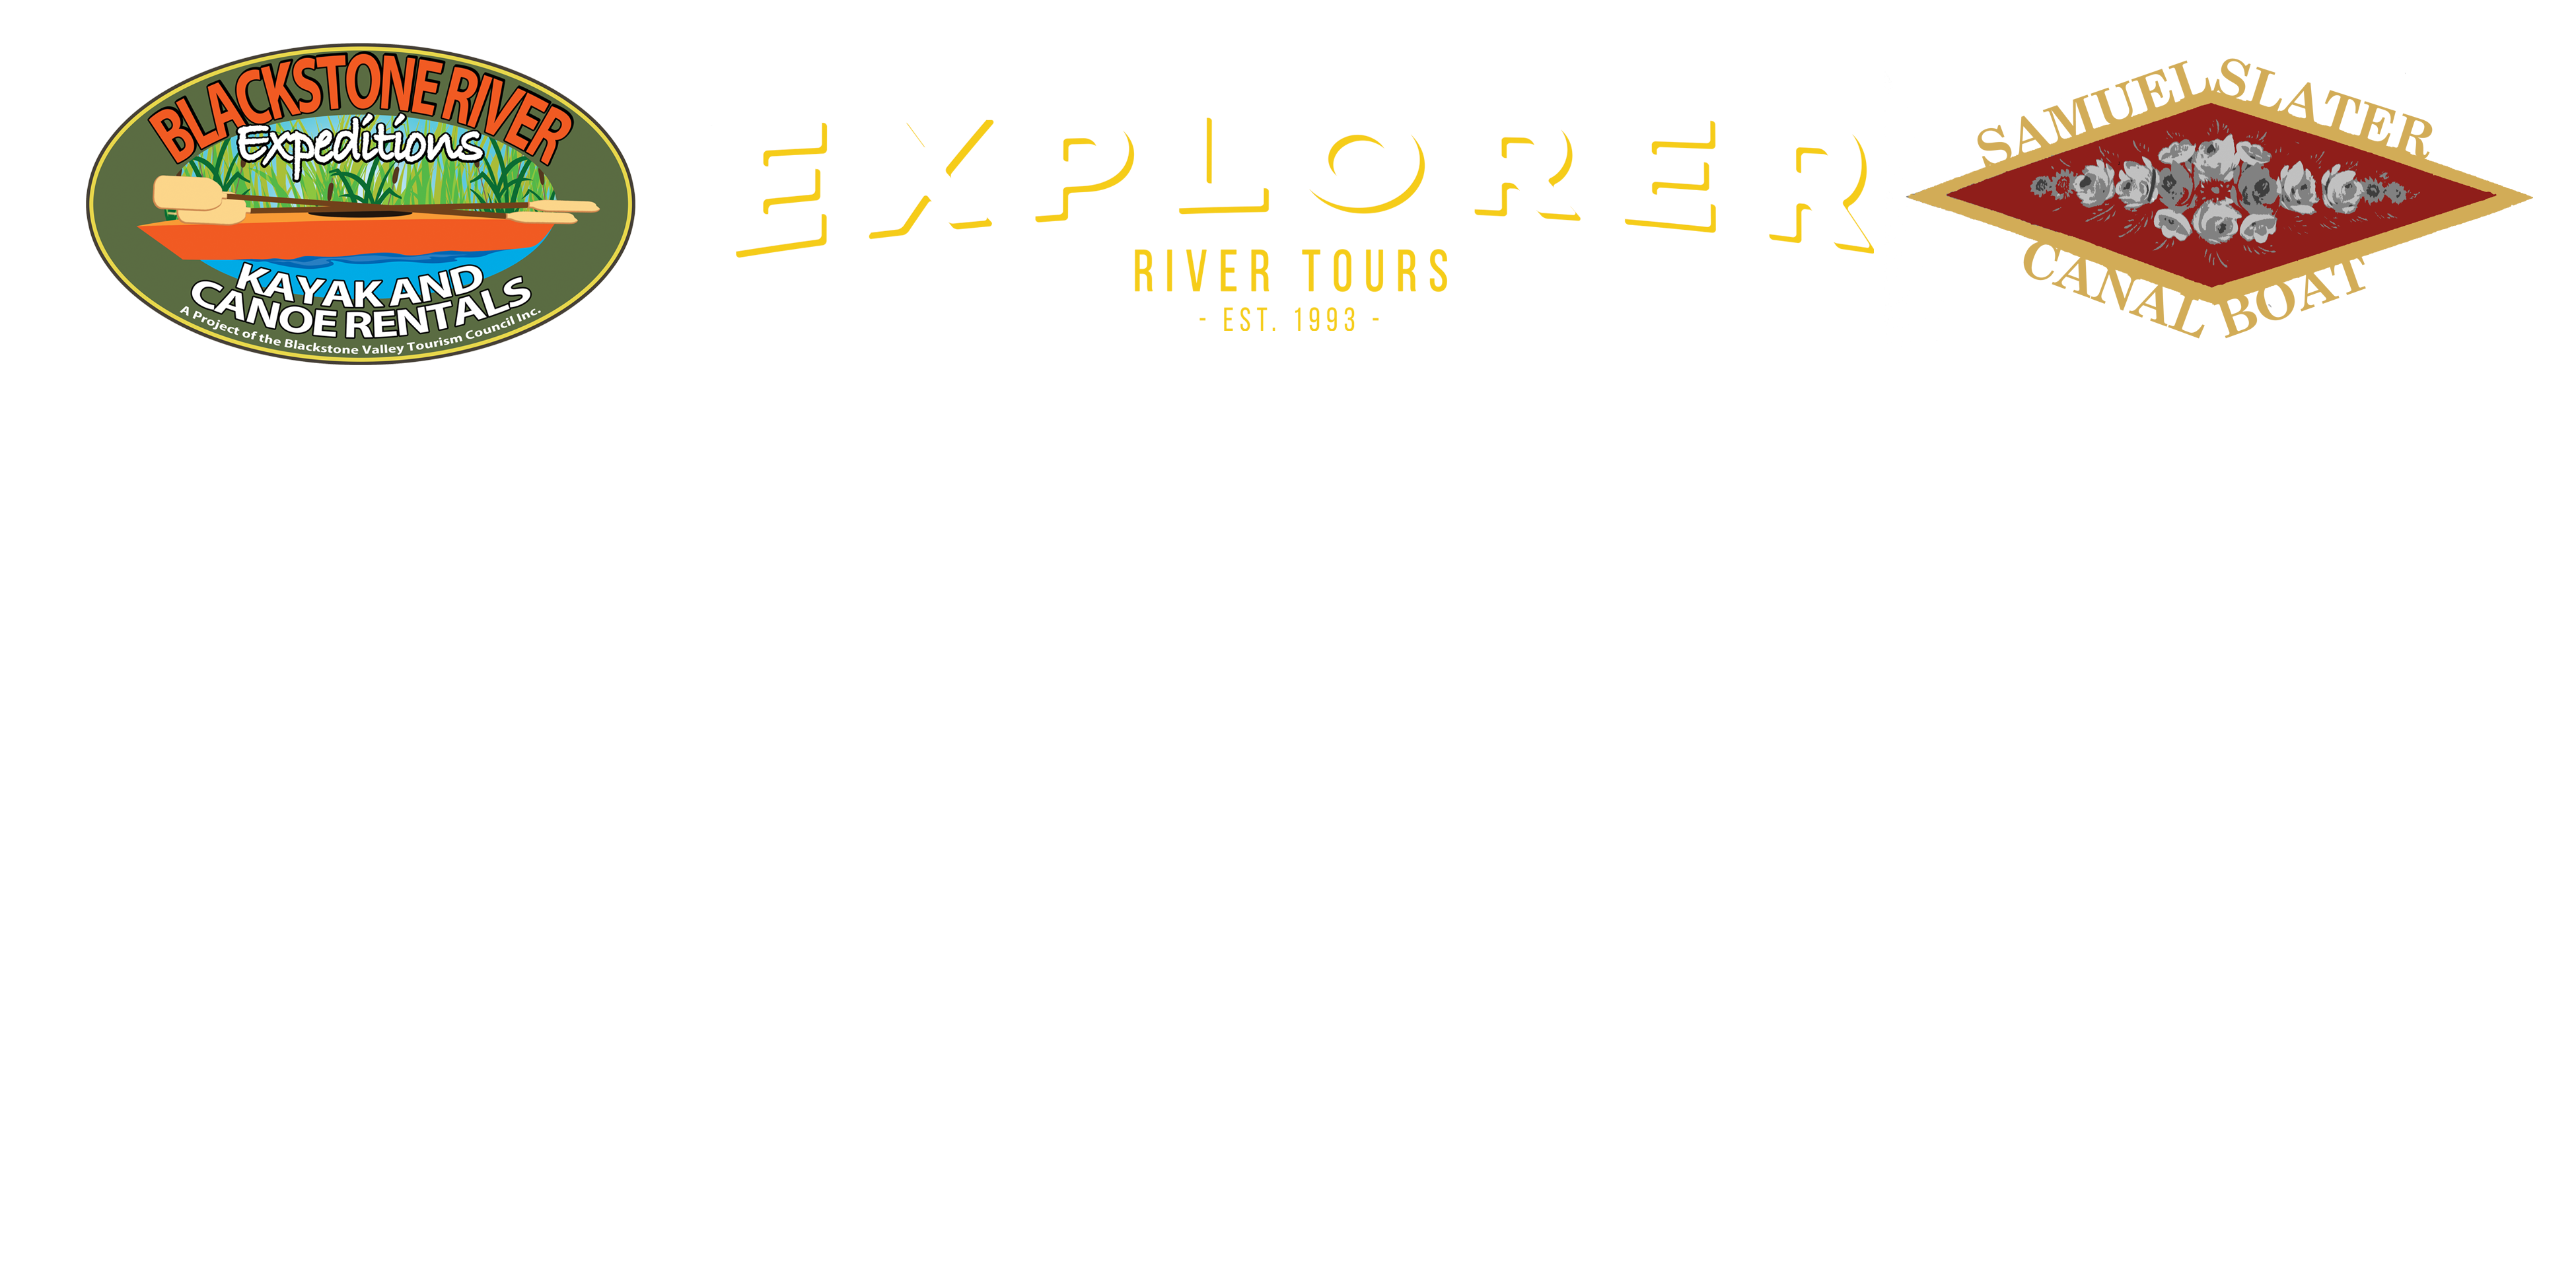 Blackstone River Expeditions & Explorer River Tours